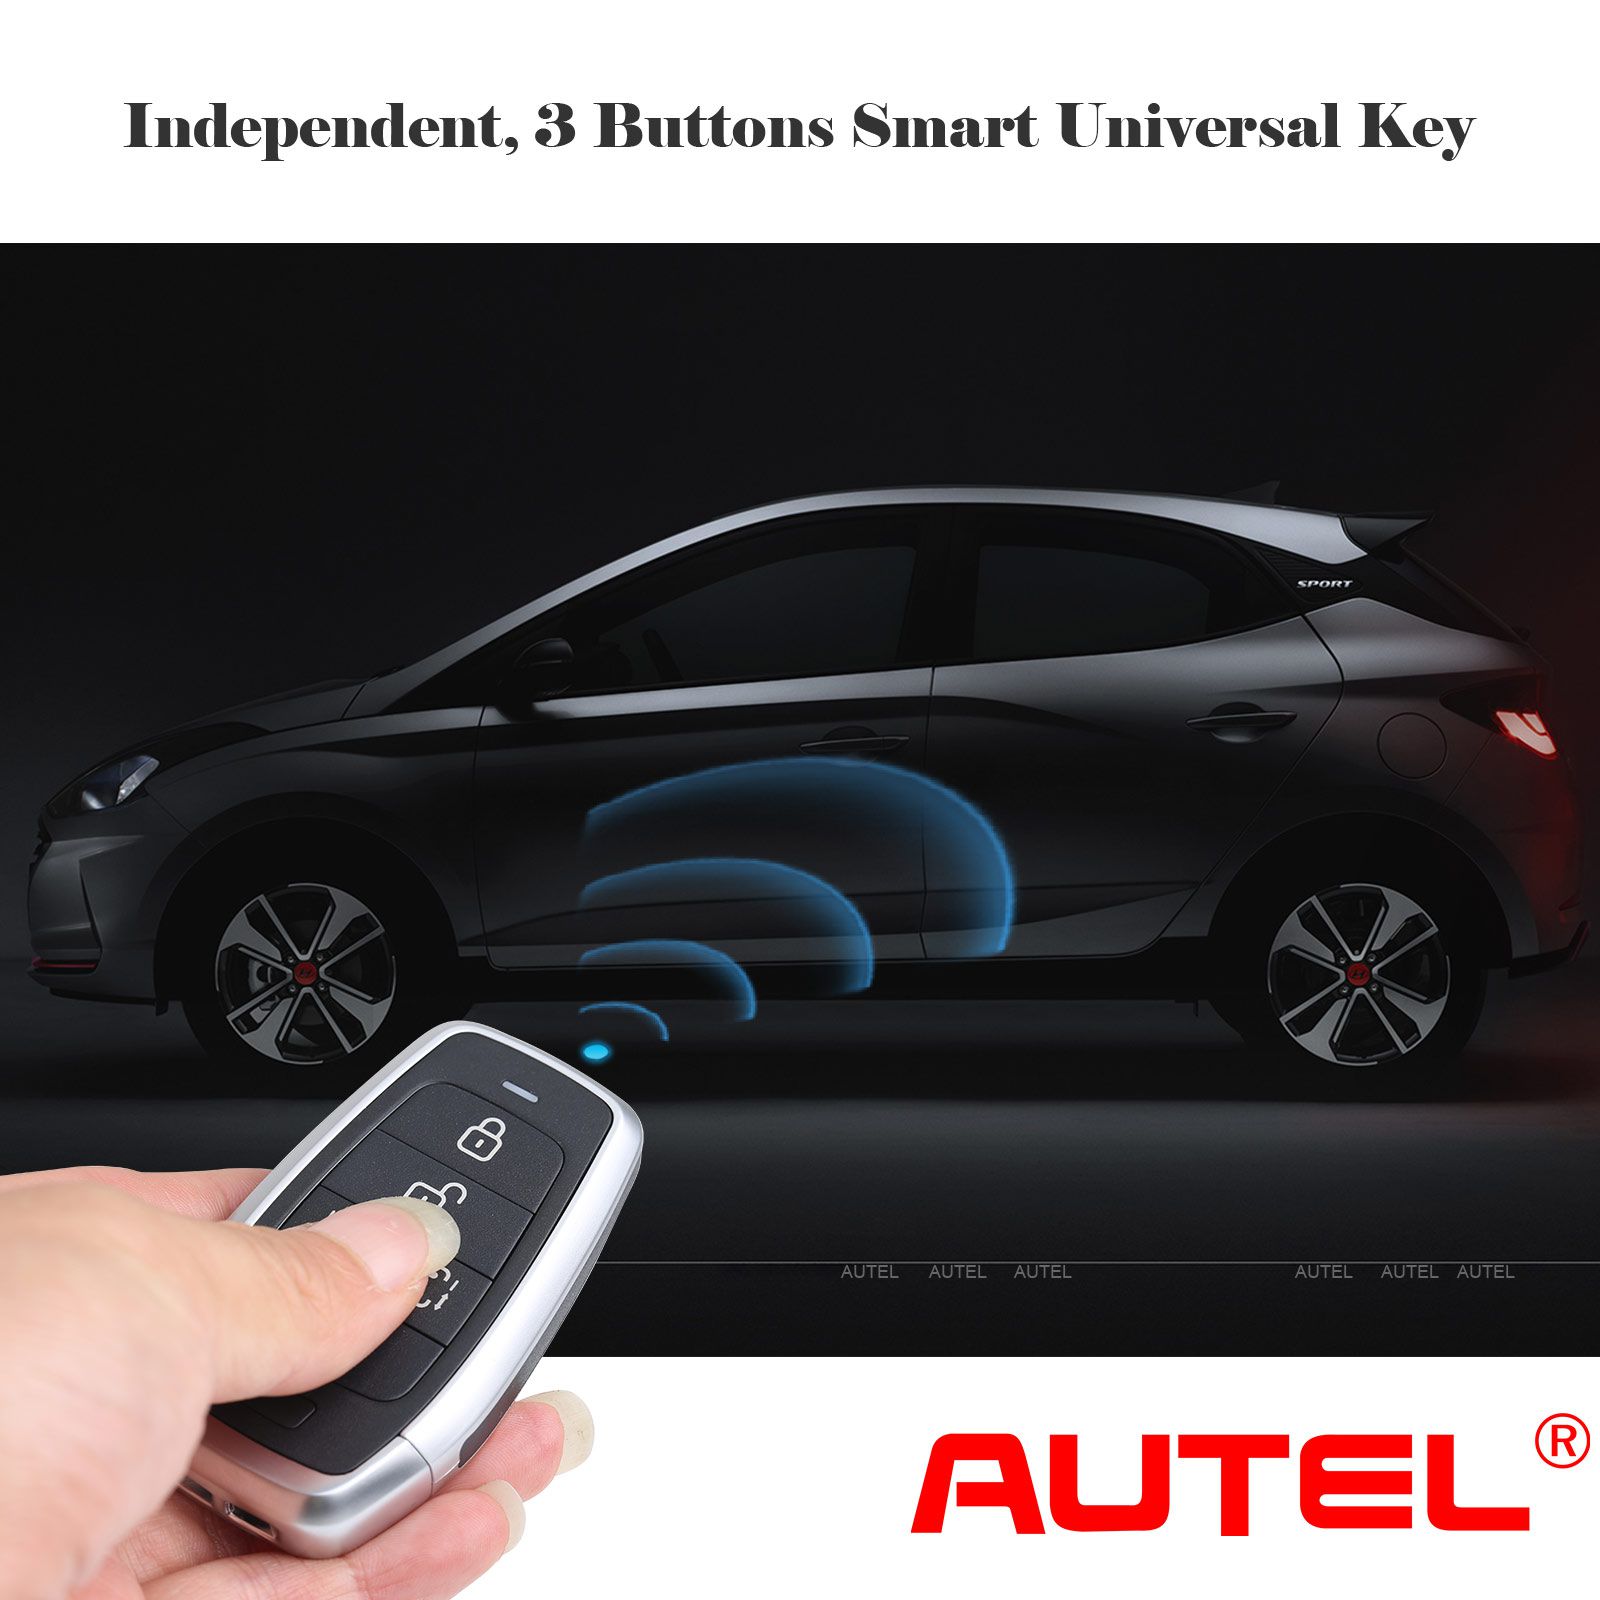 Autel ikeyat003bl 3 botones clave inteligente universal independiente 5 piezas / lote